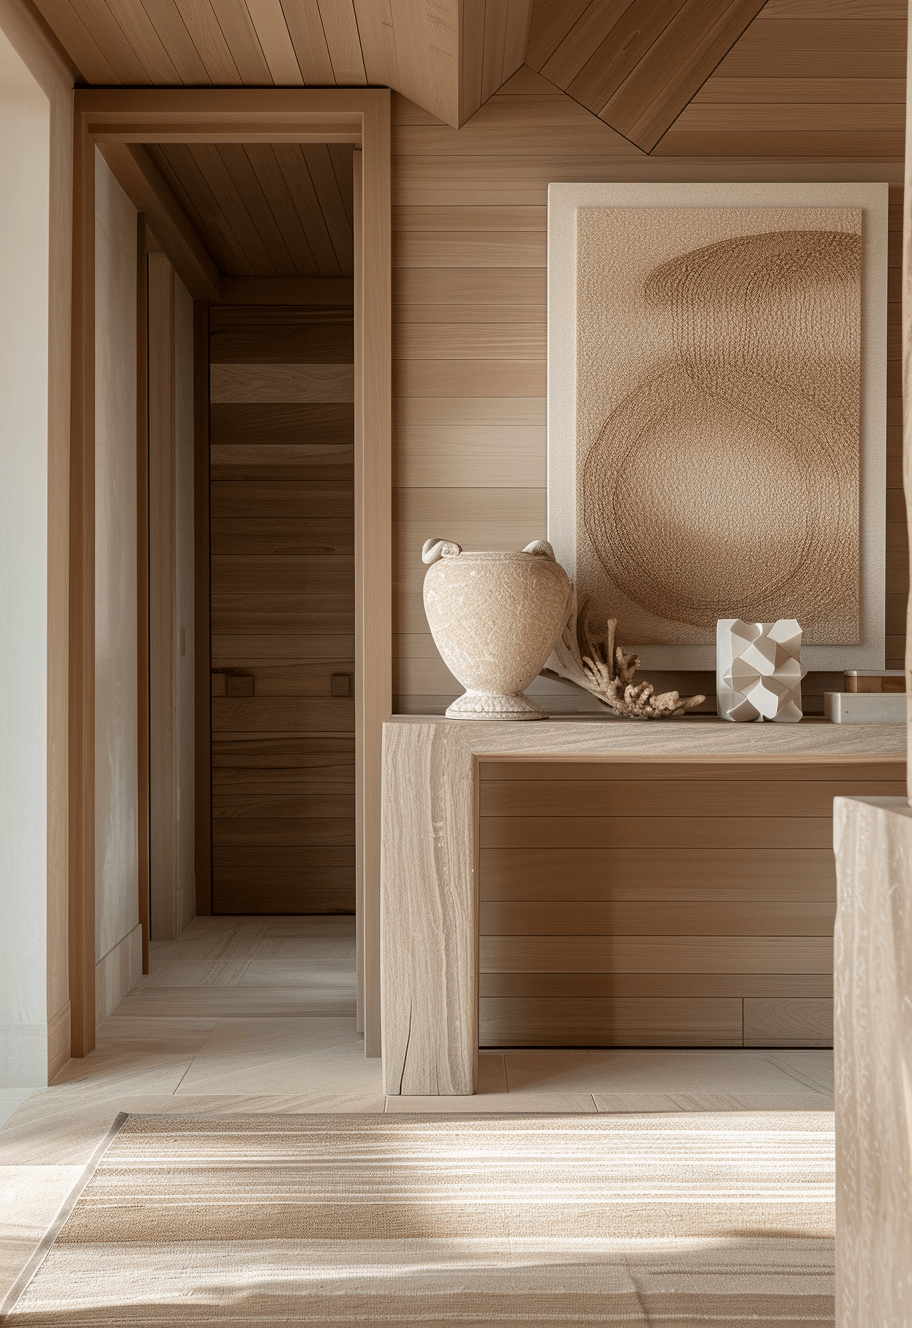 Japandi entrance with a stylish table and minimalist decorative elements